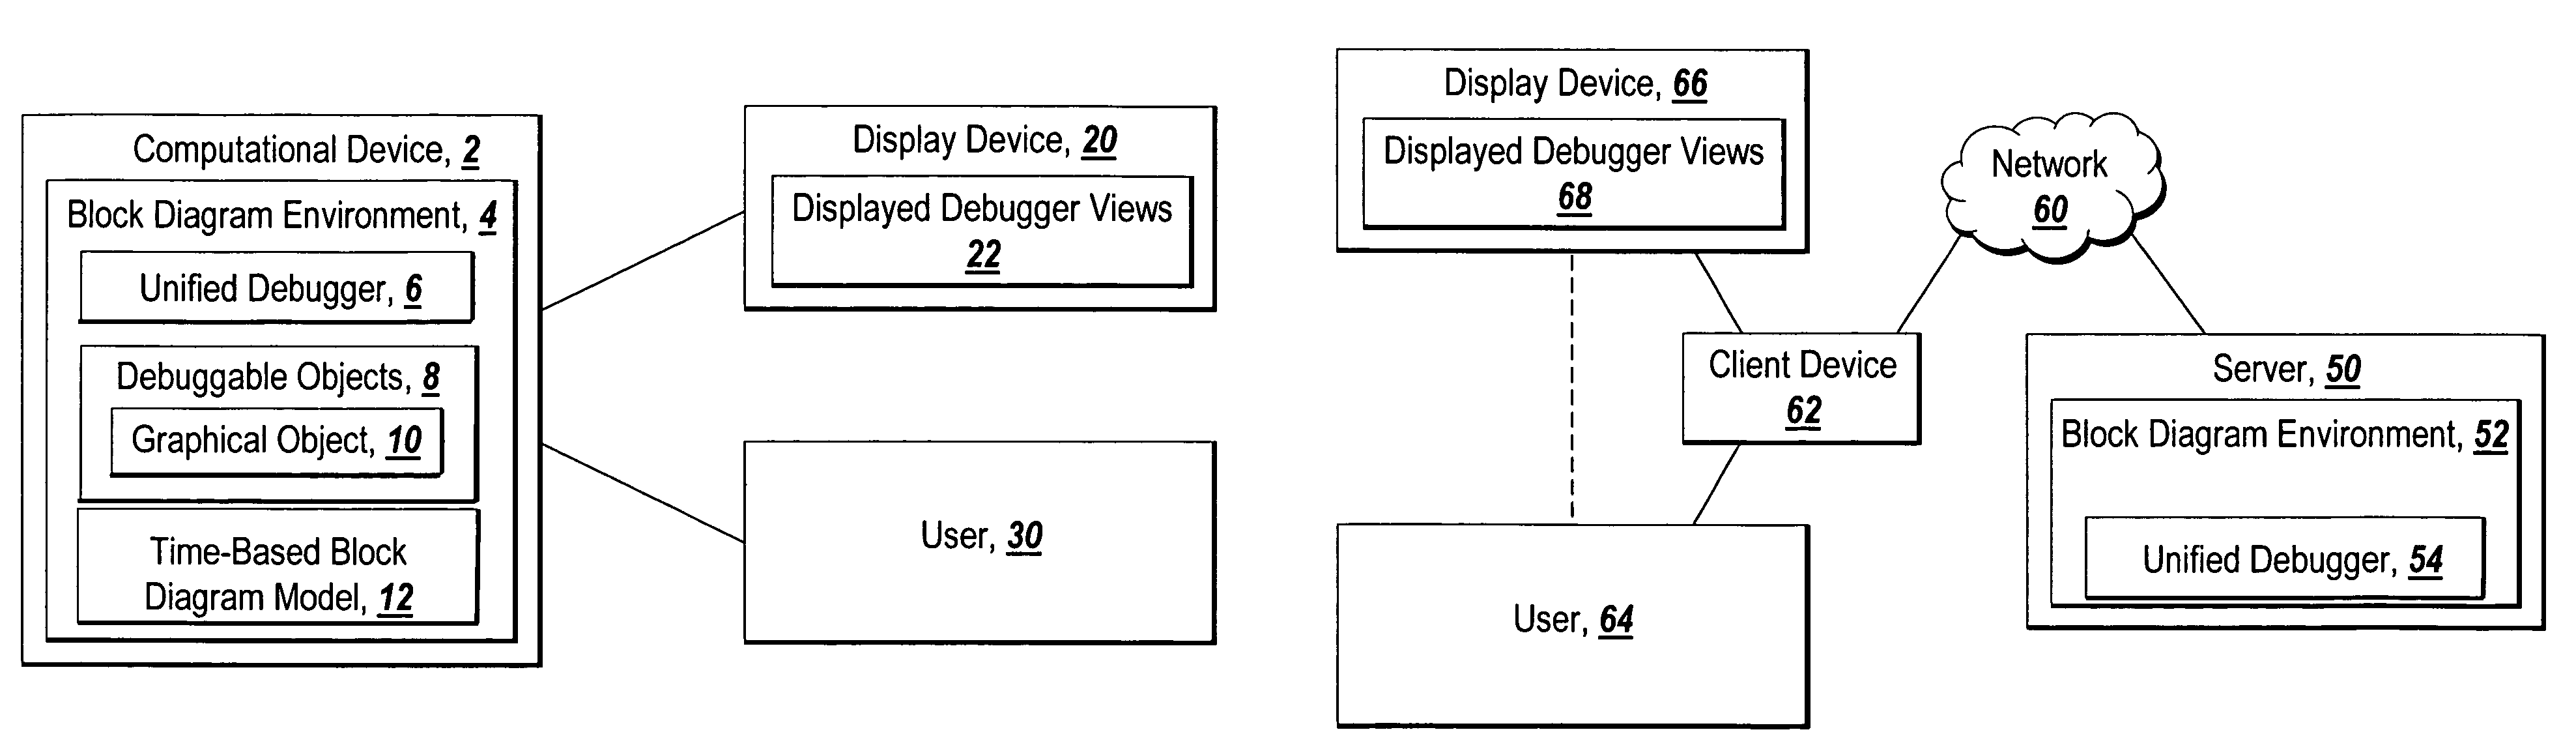 Multi-domain unified debugger